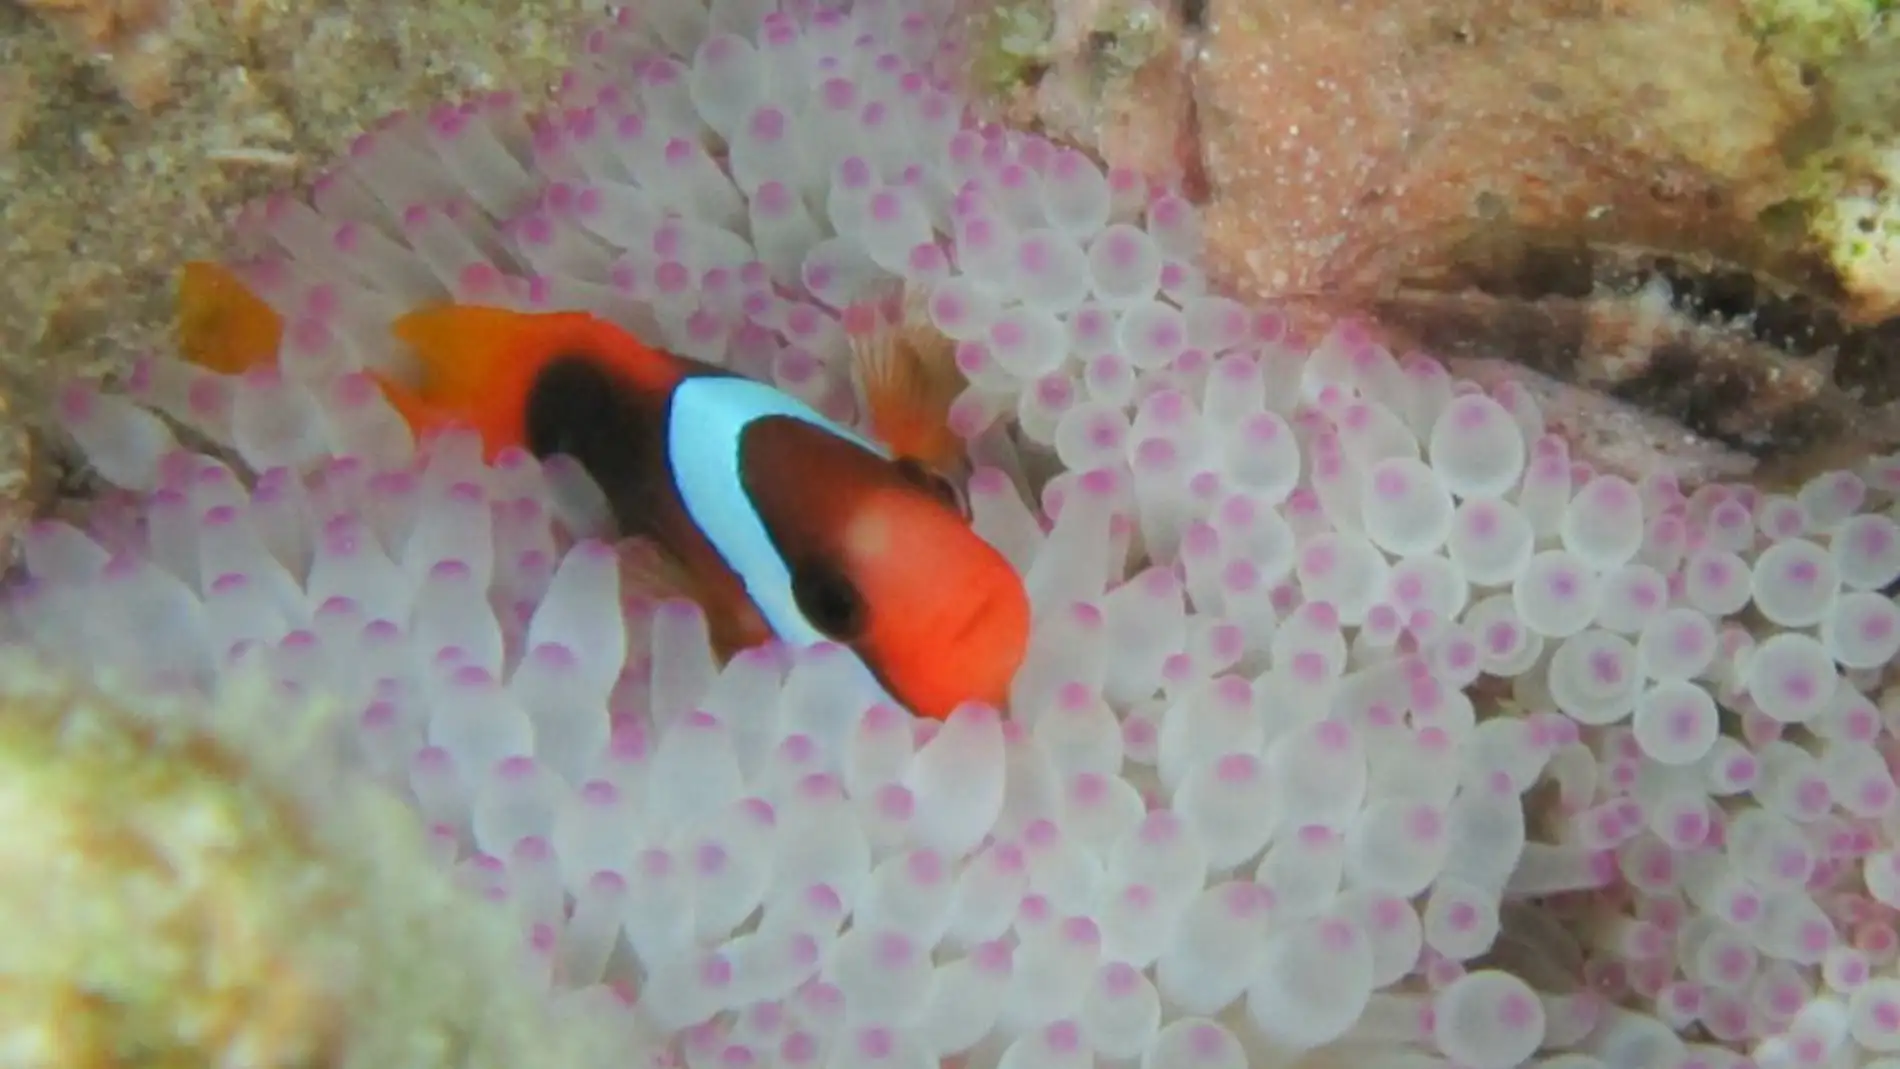 Las aguas turbias del oceano angustian a Nemo